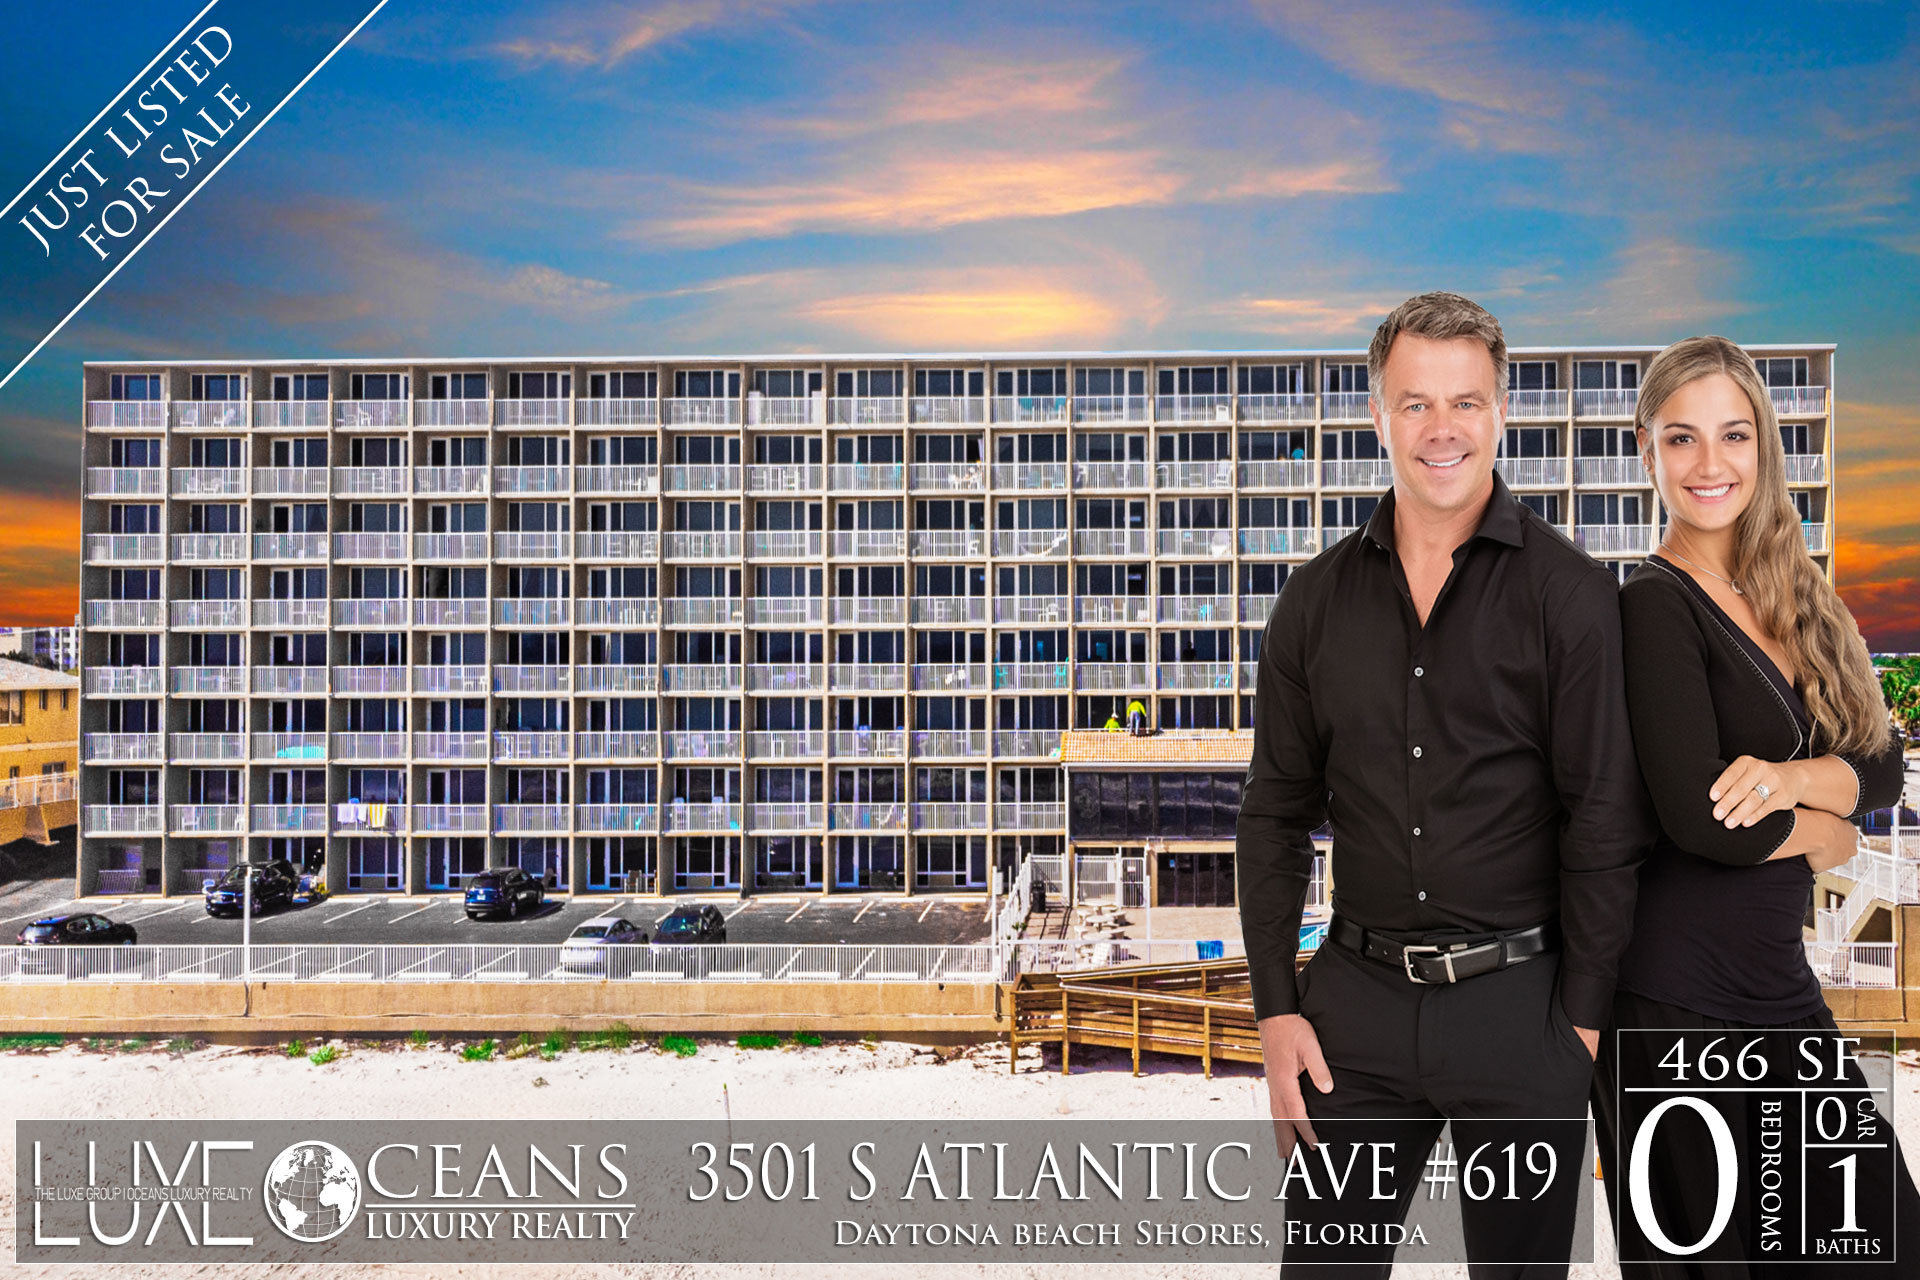 Pirates Cove Condos For Sale Oceanfront Real Estate at 3501 S Atlantic Ave,  Daytona Beach Shores, FL  